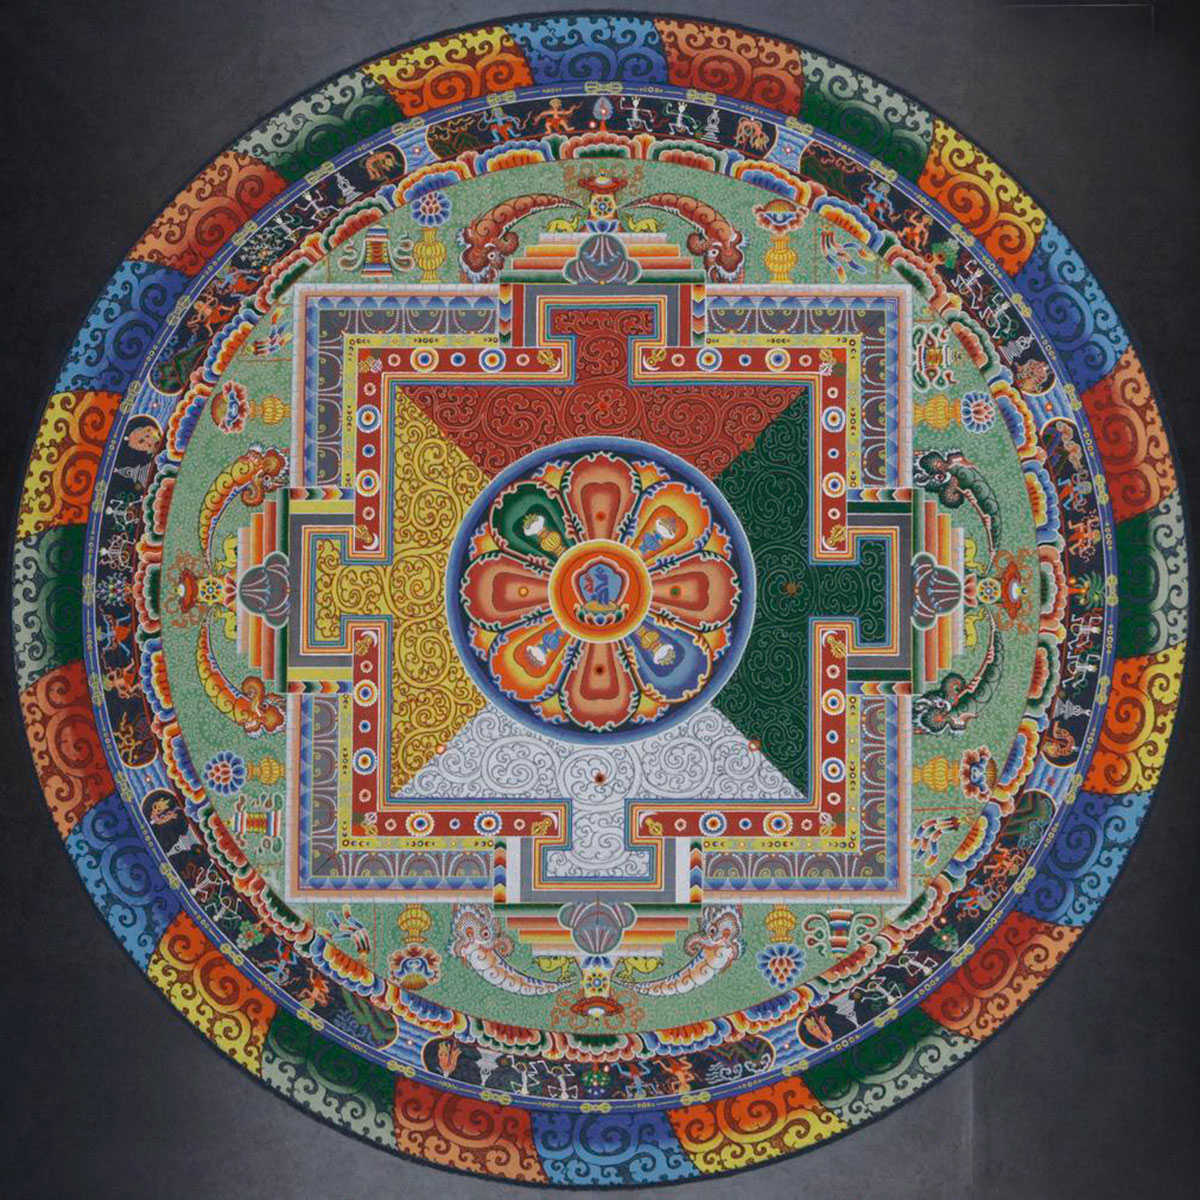 fertiges Mandala | Foto: Paul Leclaire